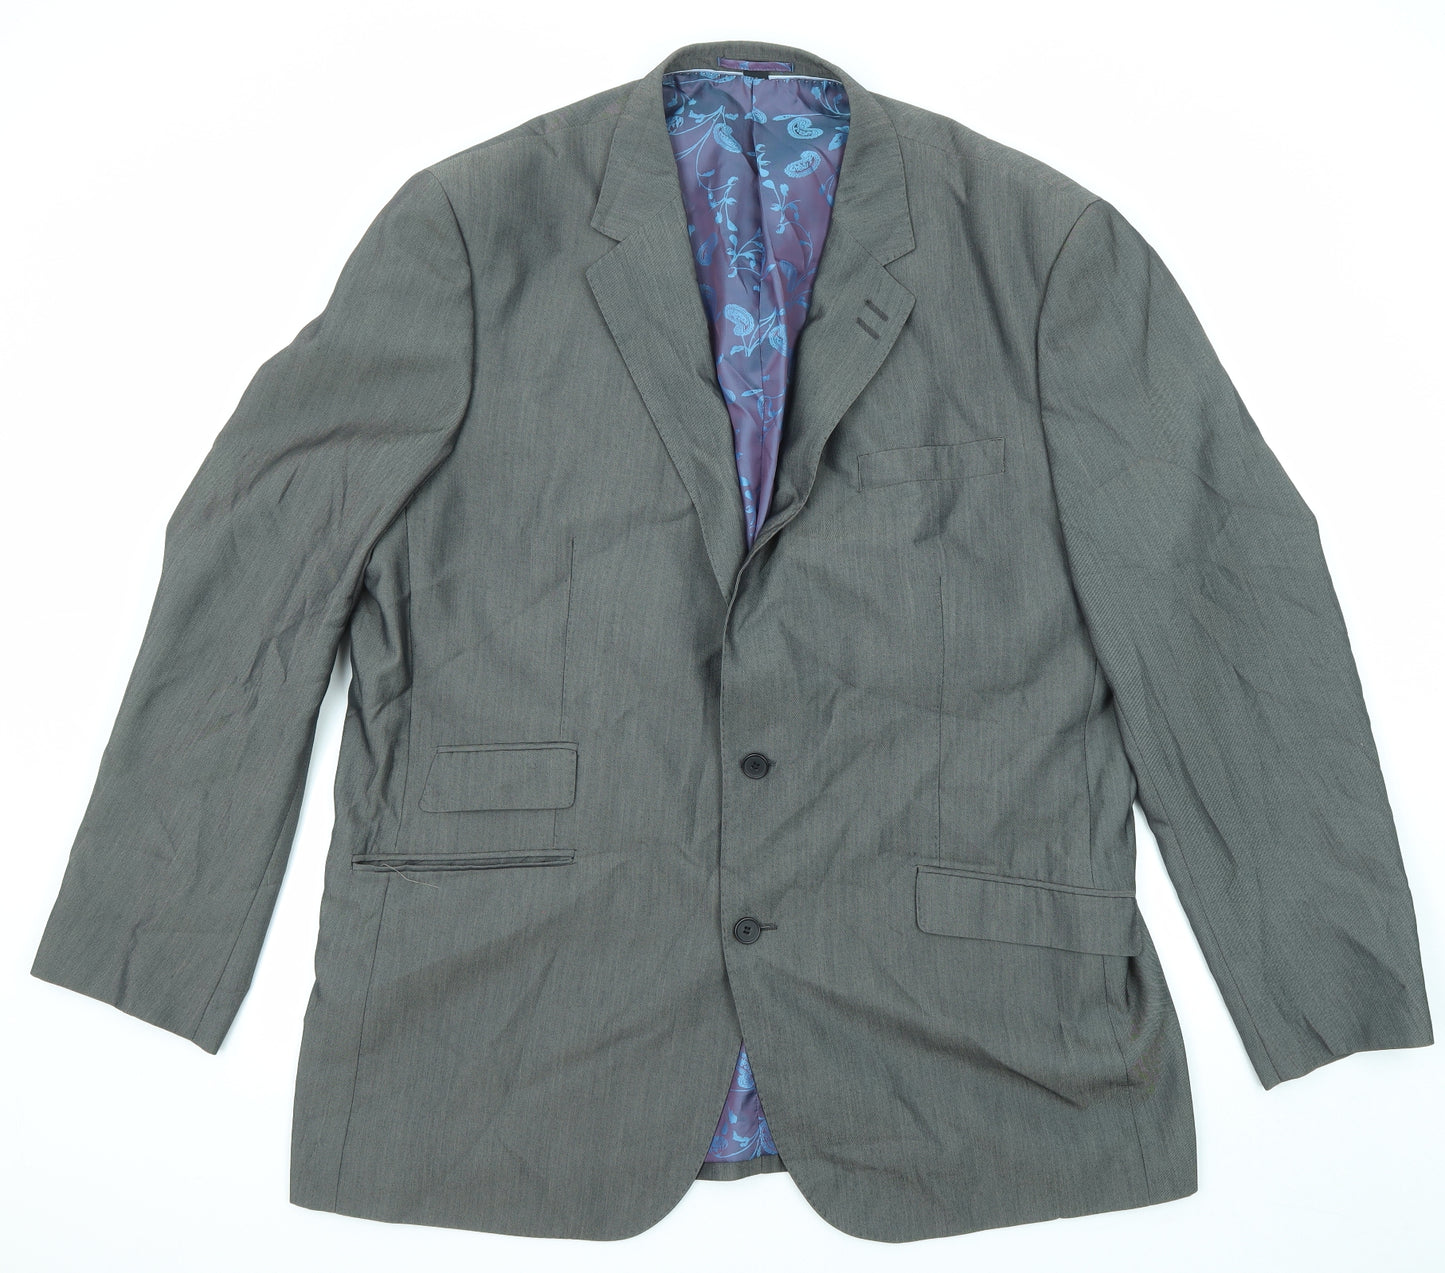 Jacamo Mens Grey Polyester Jacket Suit Jacket Size 50 Regular